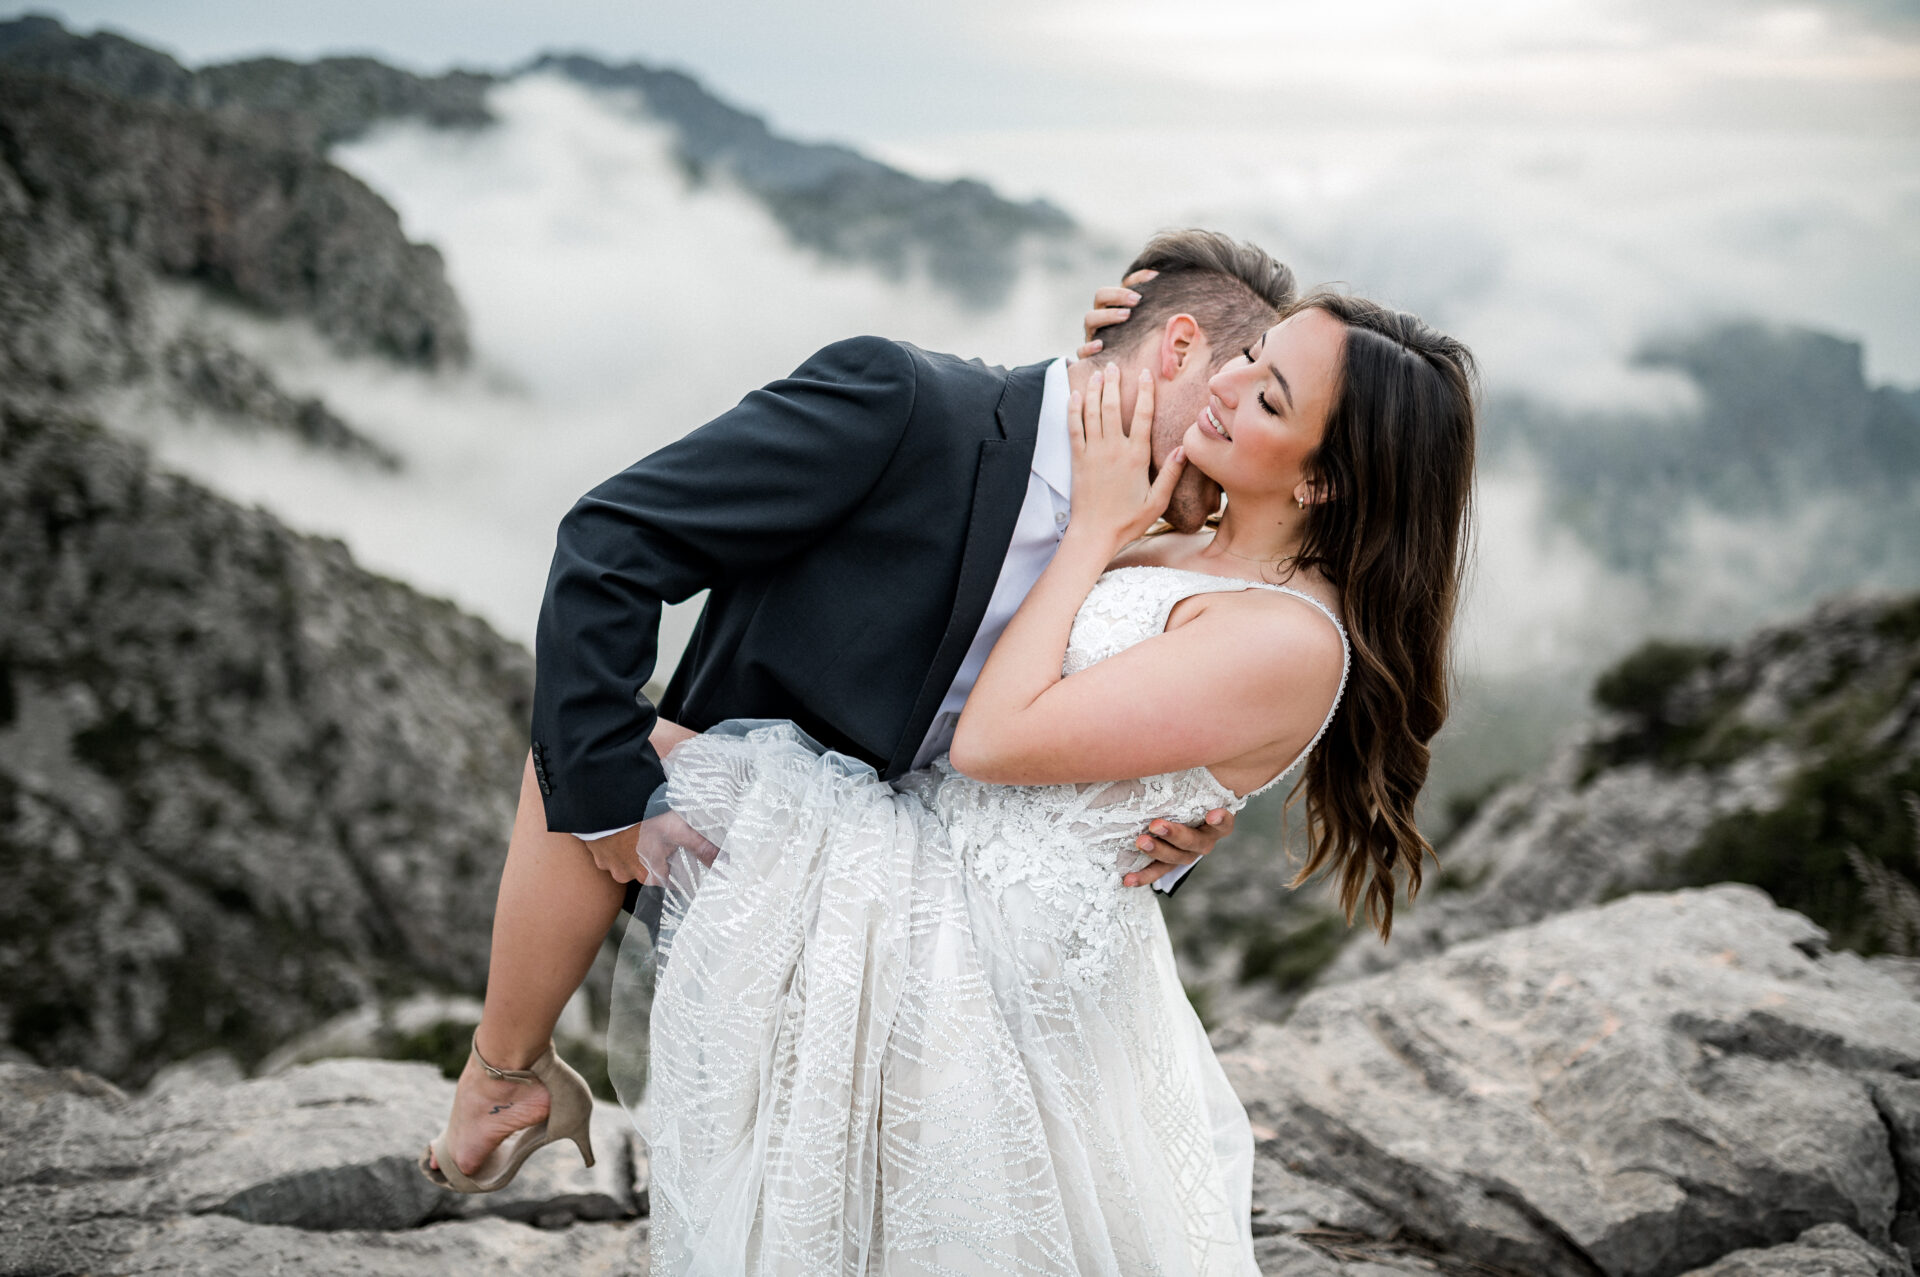 Lexi & Alex – After Wedding auf Mallorca